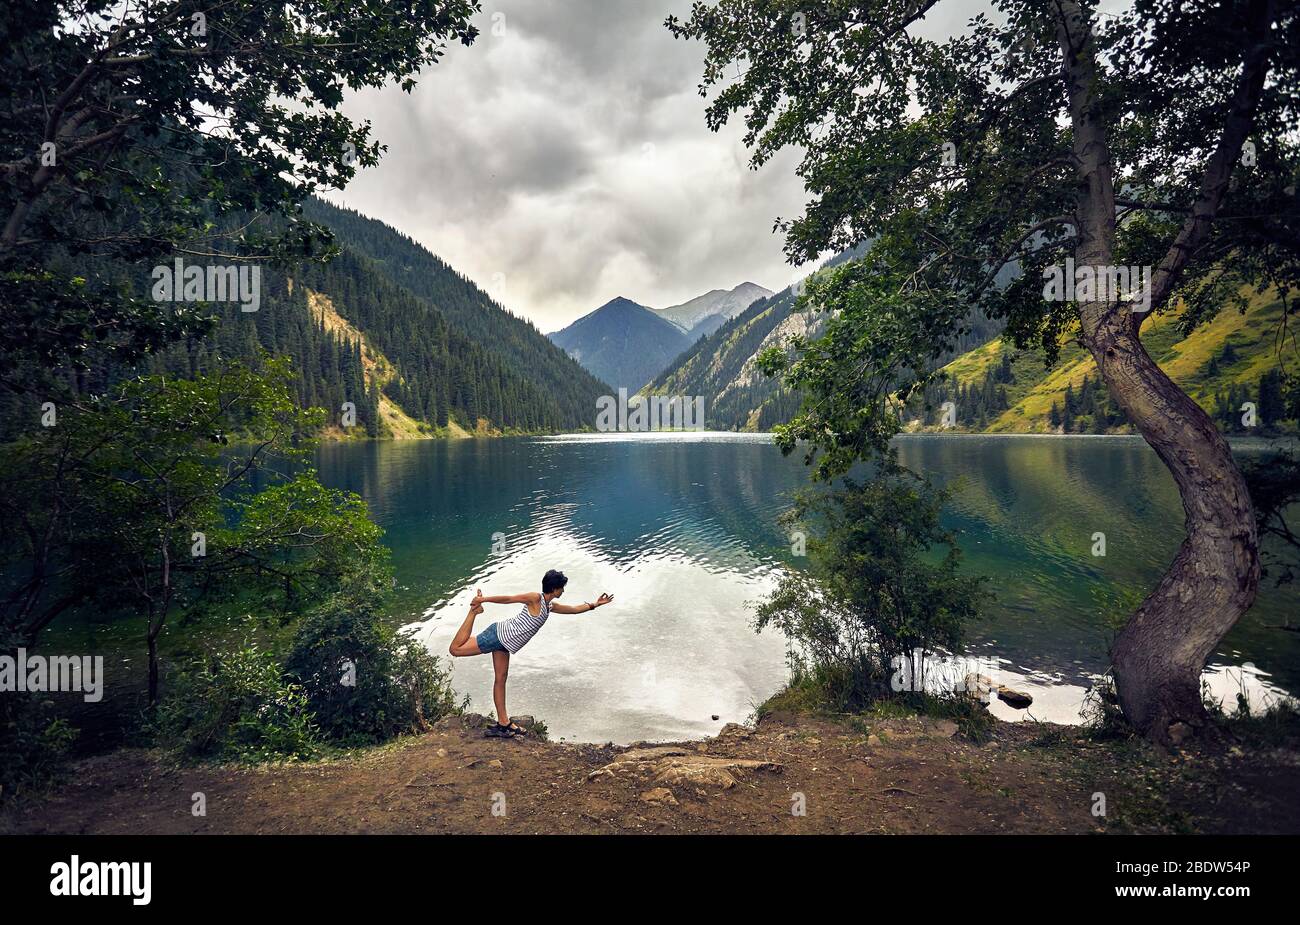 Junge Frau ist Yoga balance Pose am Bergsee mit bedecktem Himmel Hintergrund Stockfoto